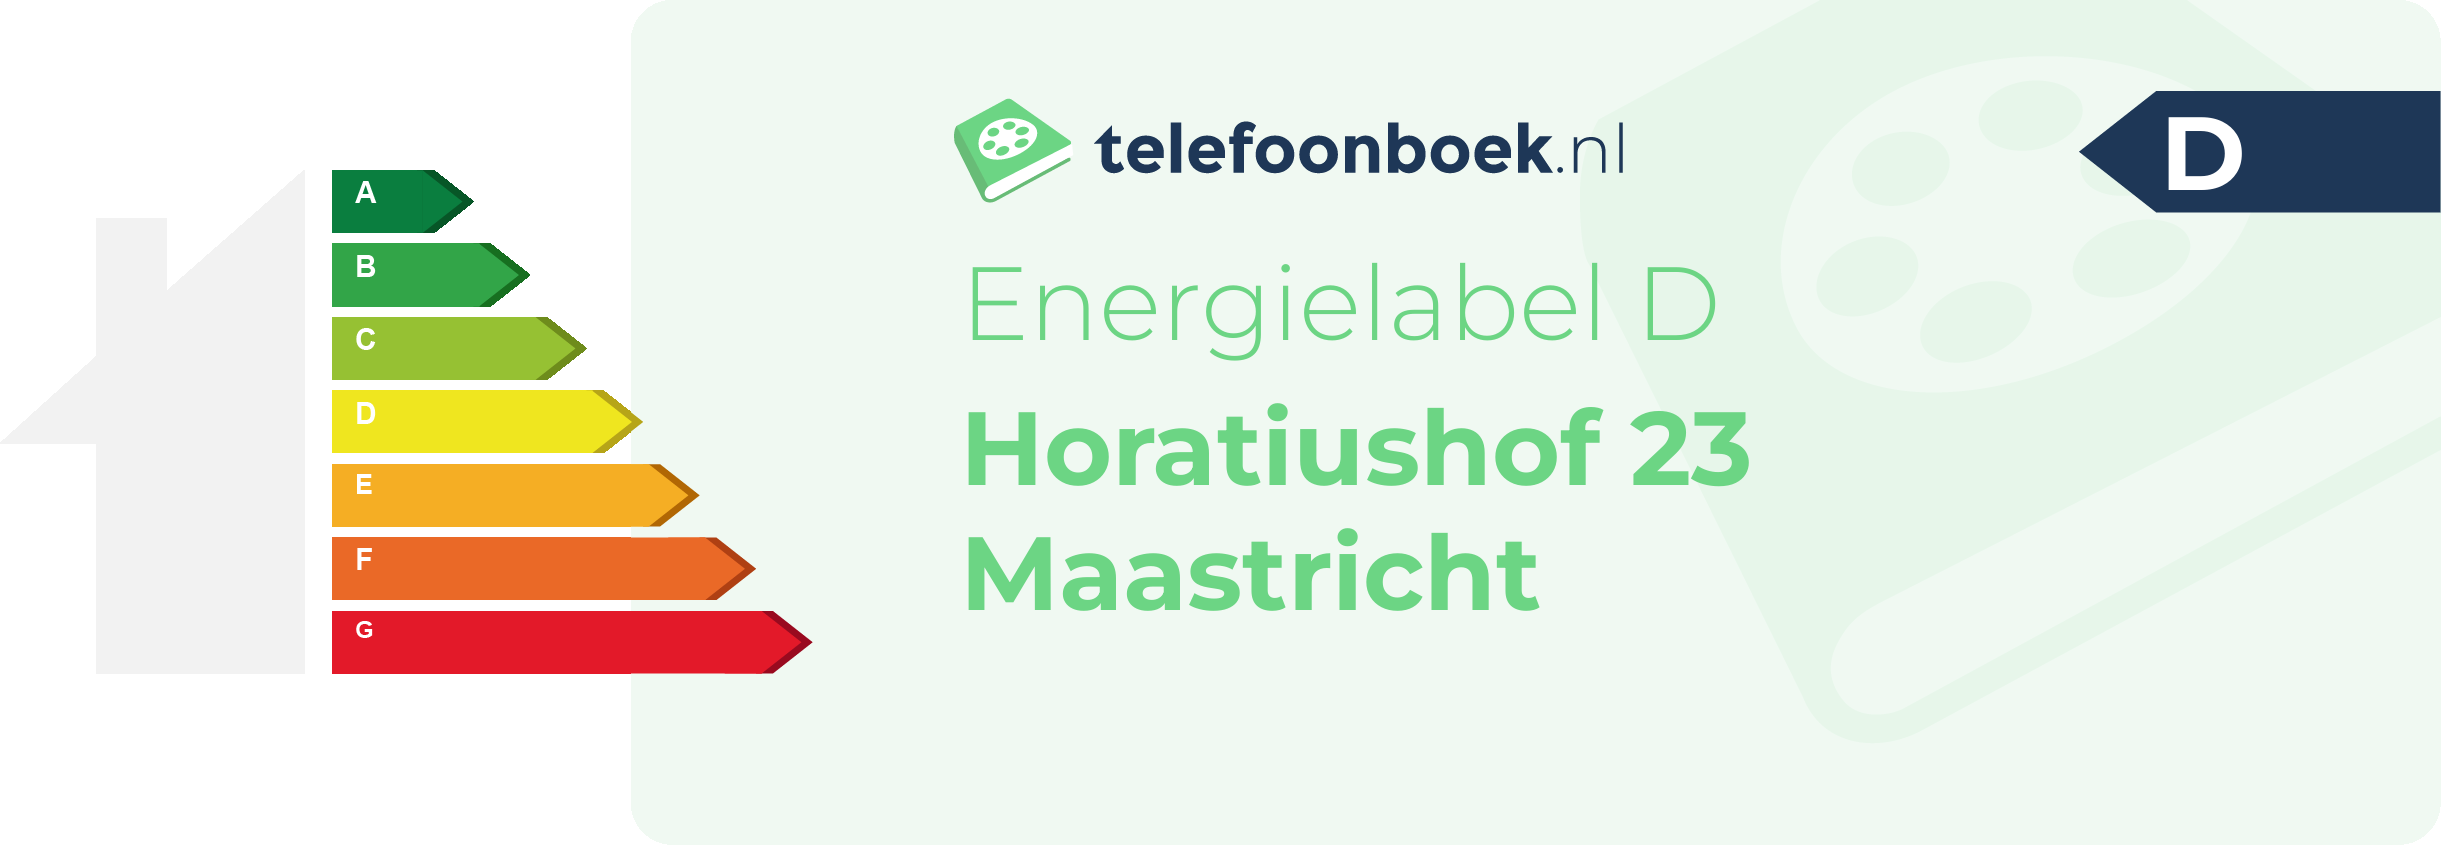 Energielabel Horatiushof 23 Maastricht